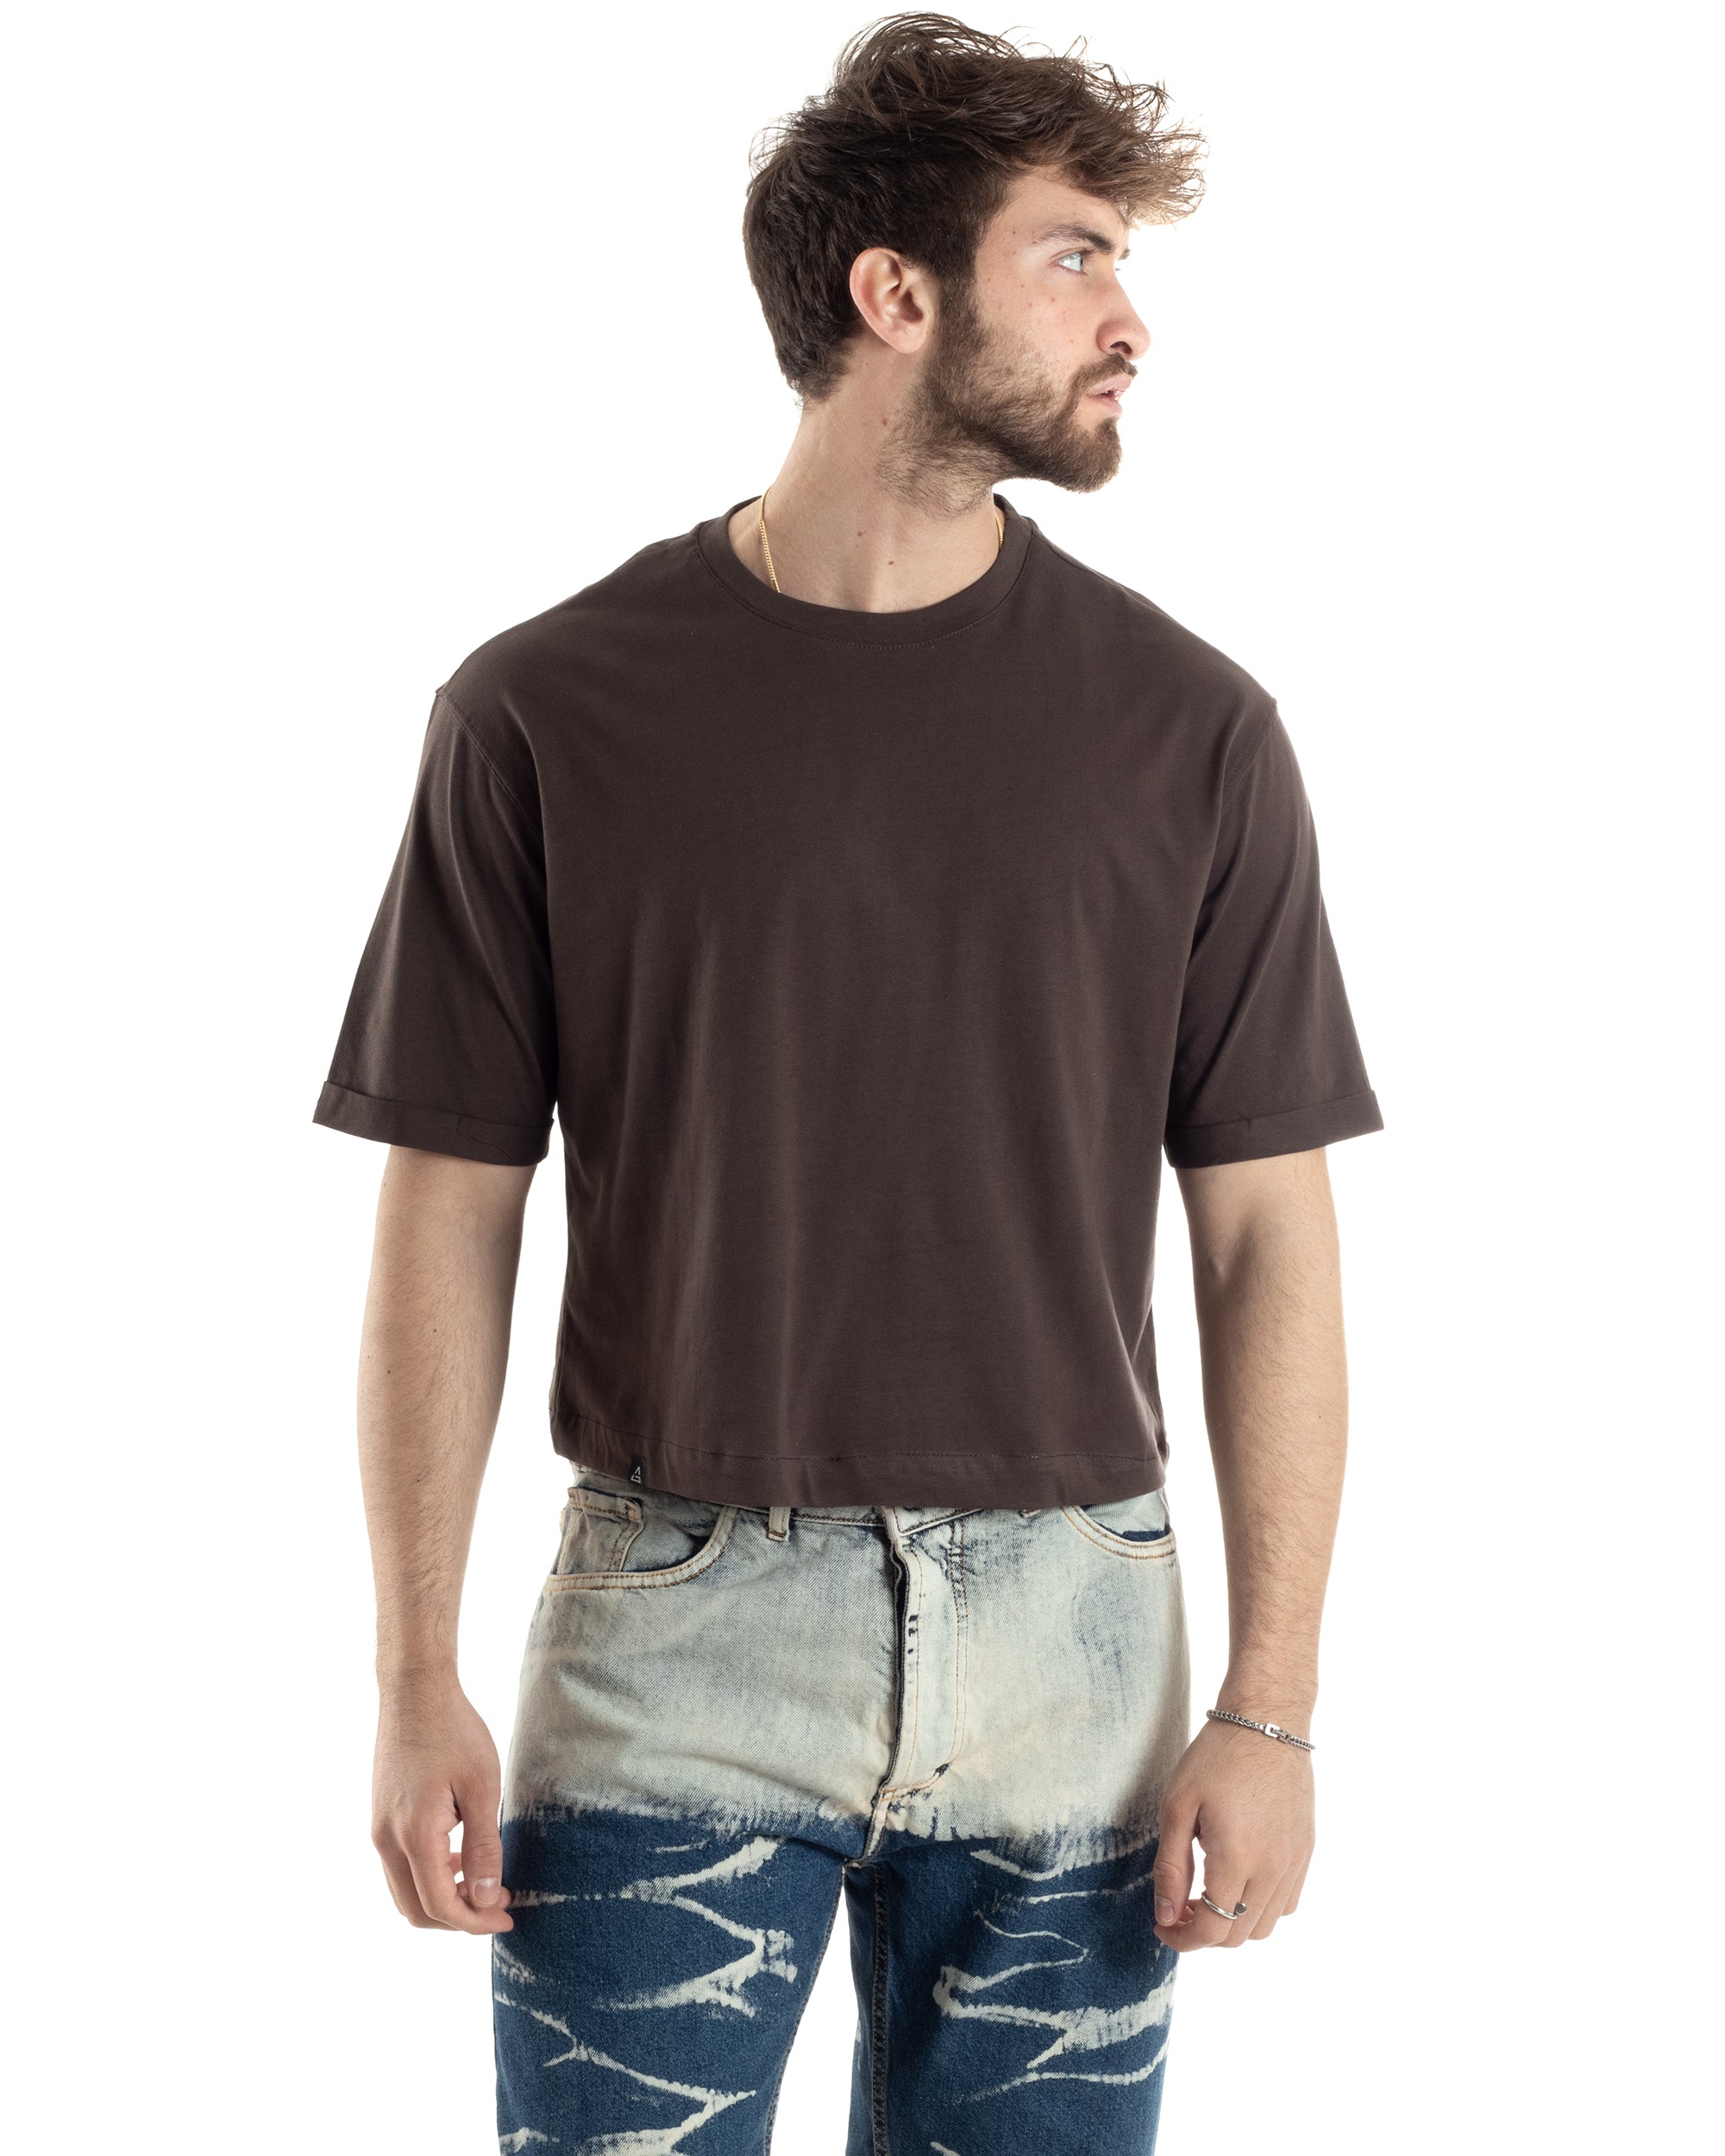 T-shirt Uomo Cropped Corta Boxy Fit Tinta Unita Marrone Casual GIOSAL-TS3008A